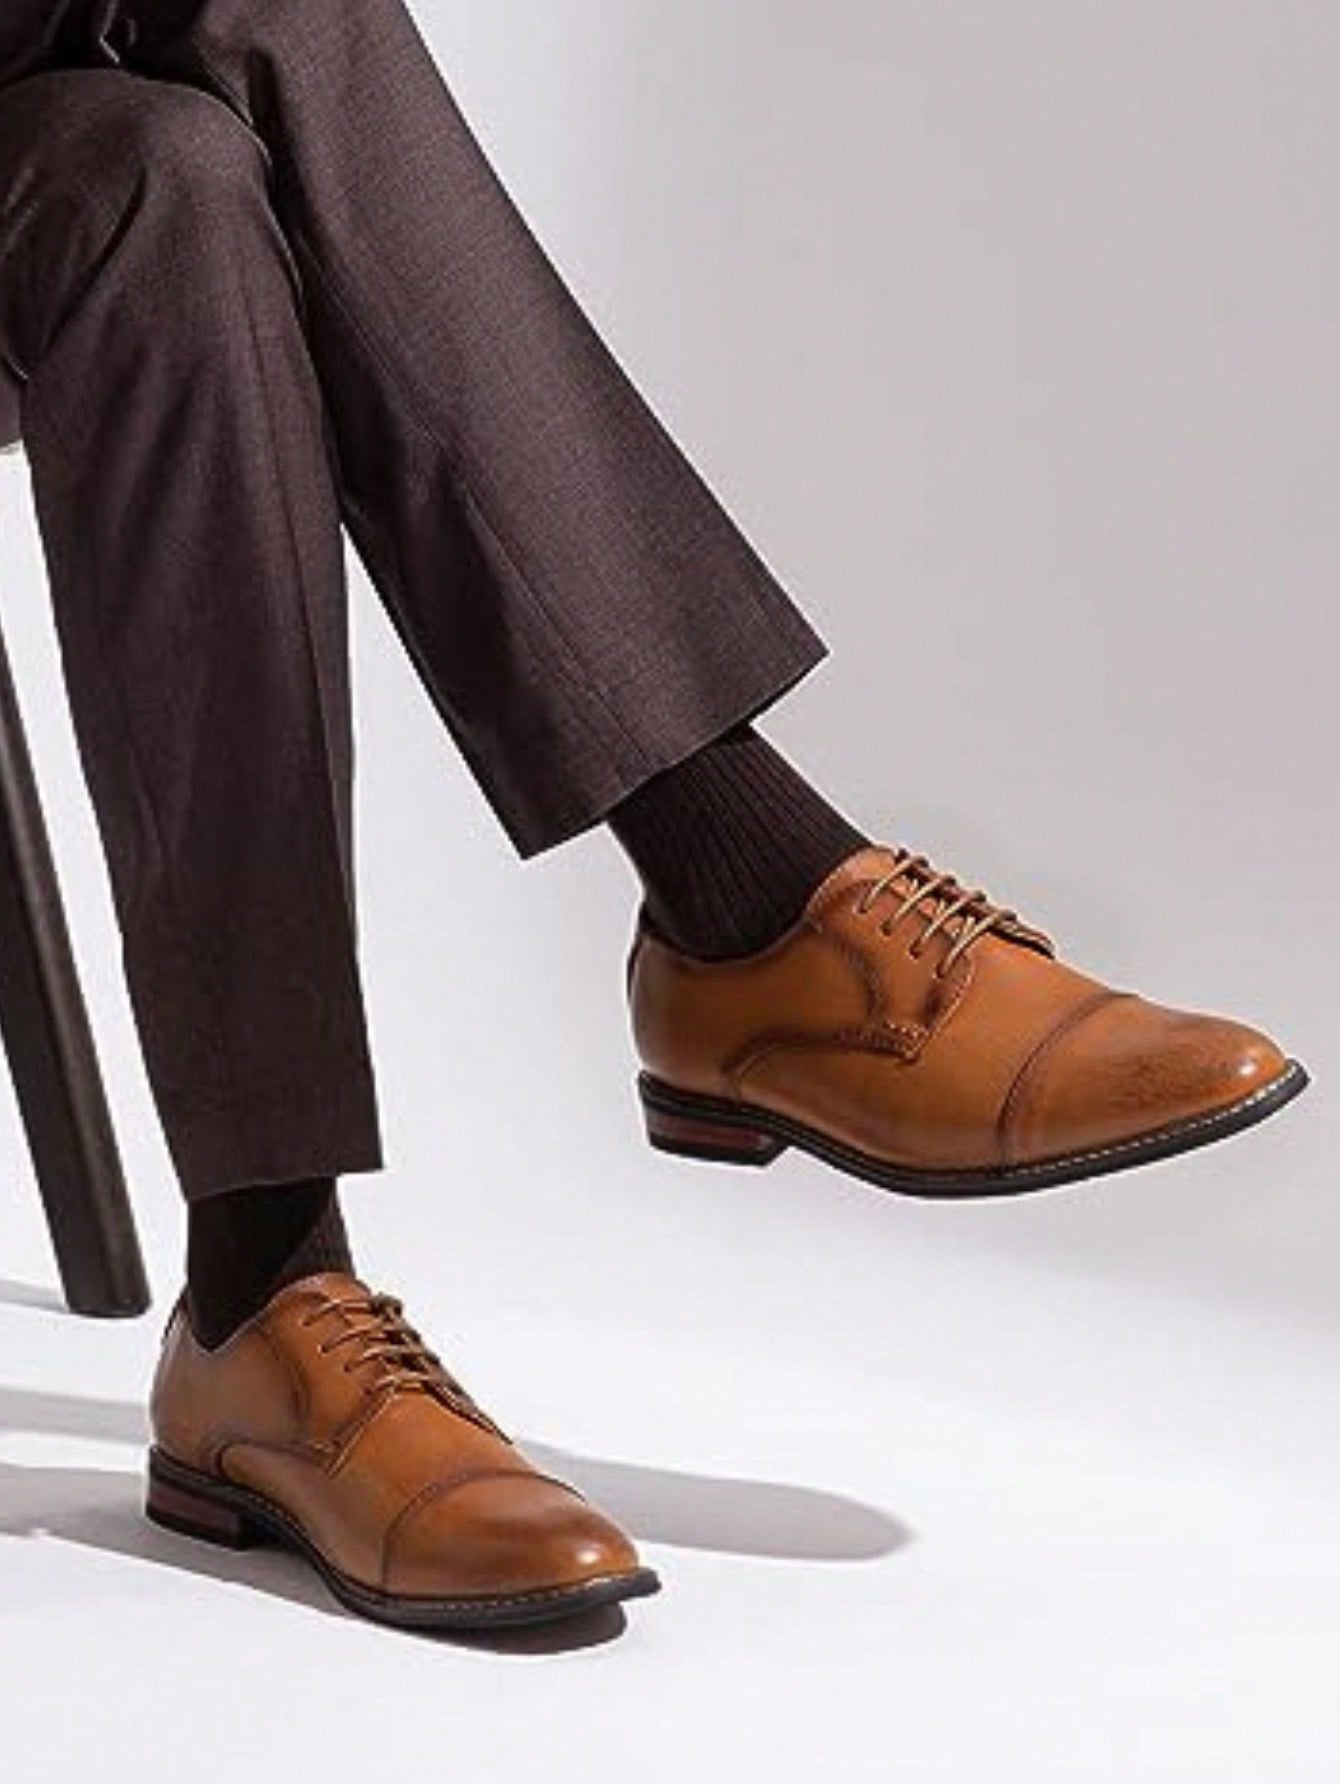 SHOESMALL Men‘s Dress Shoes Classic Oxfords Formal Business Shoes ...